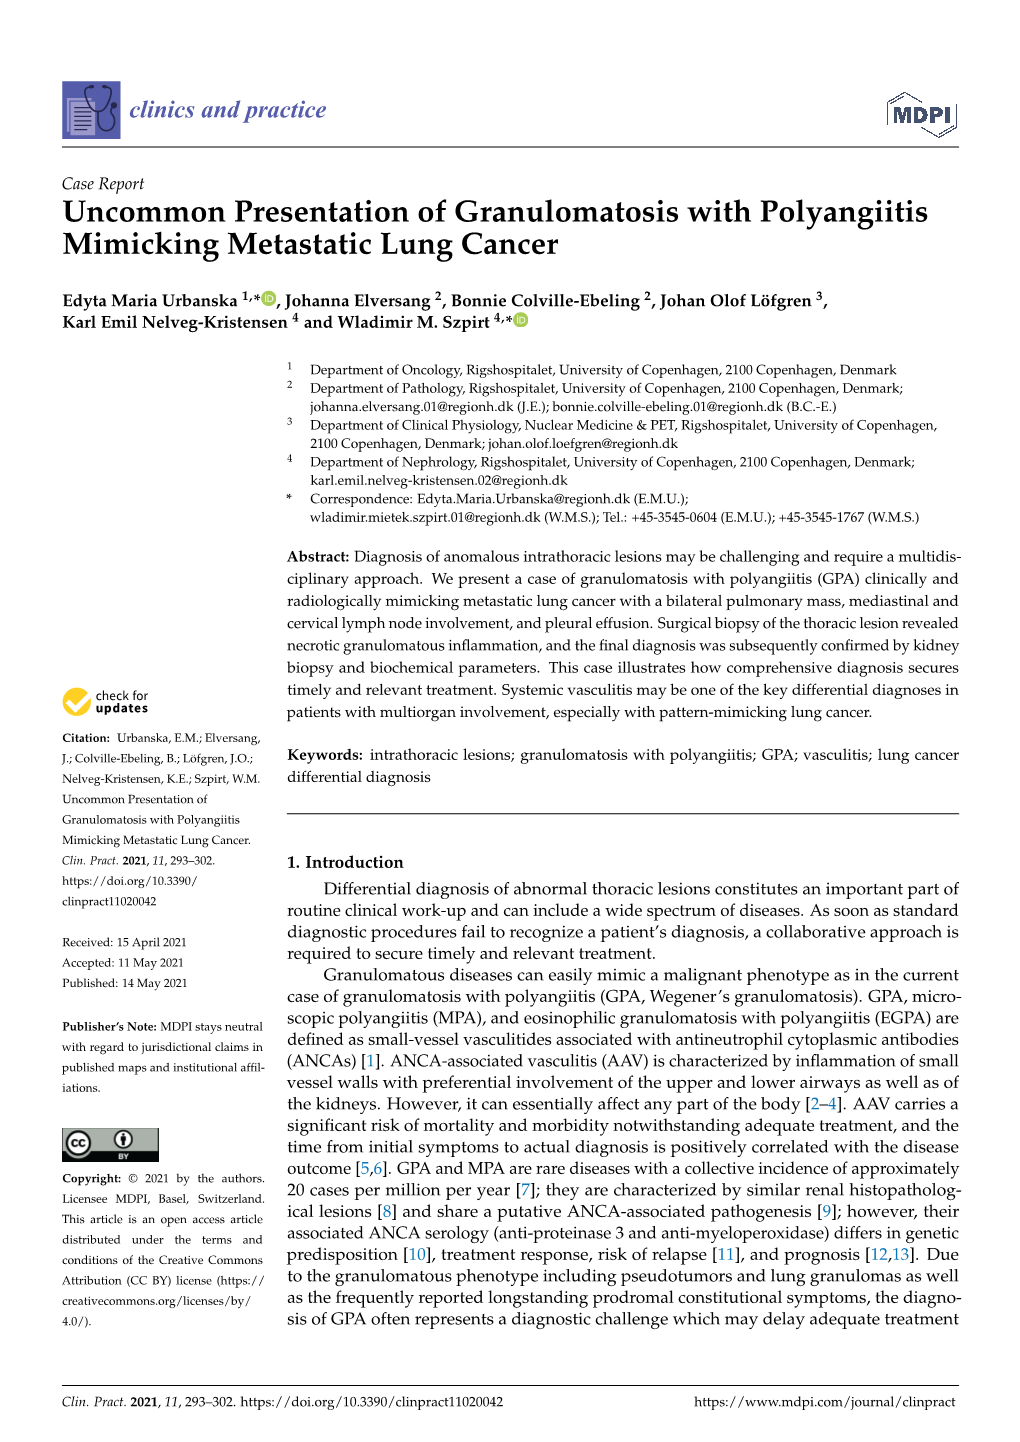 Uncommon Presentation of Granulomatosis with Polyangiitis Mimicking Metastatic Lung Cancer